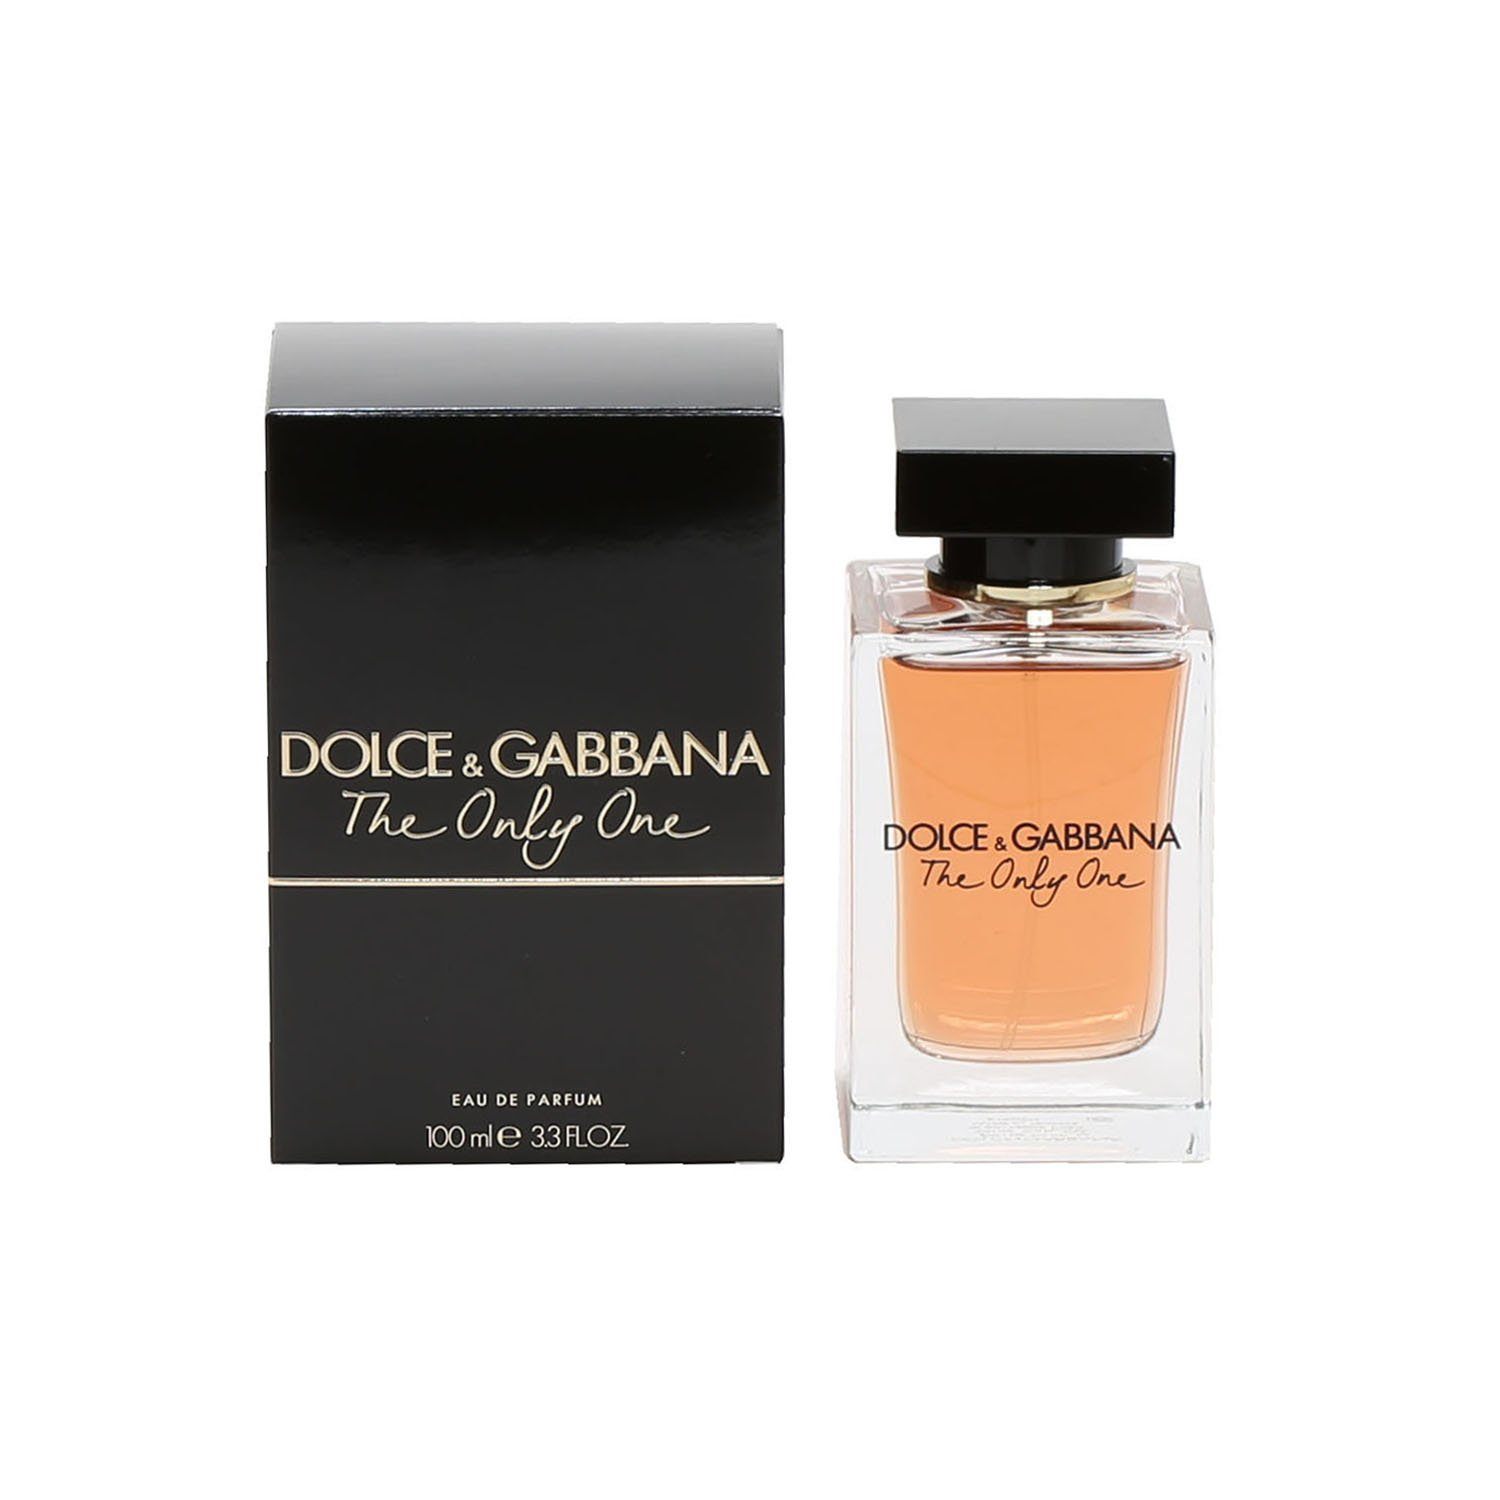 Dolce & Gabbana The One Gold for Women Eau de Parfum Spray